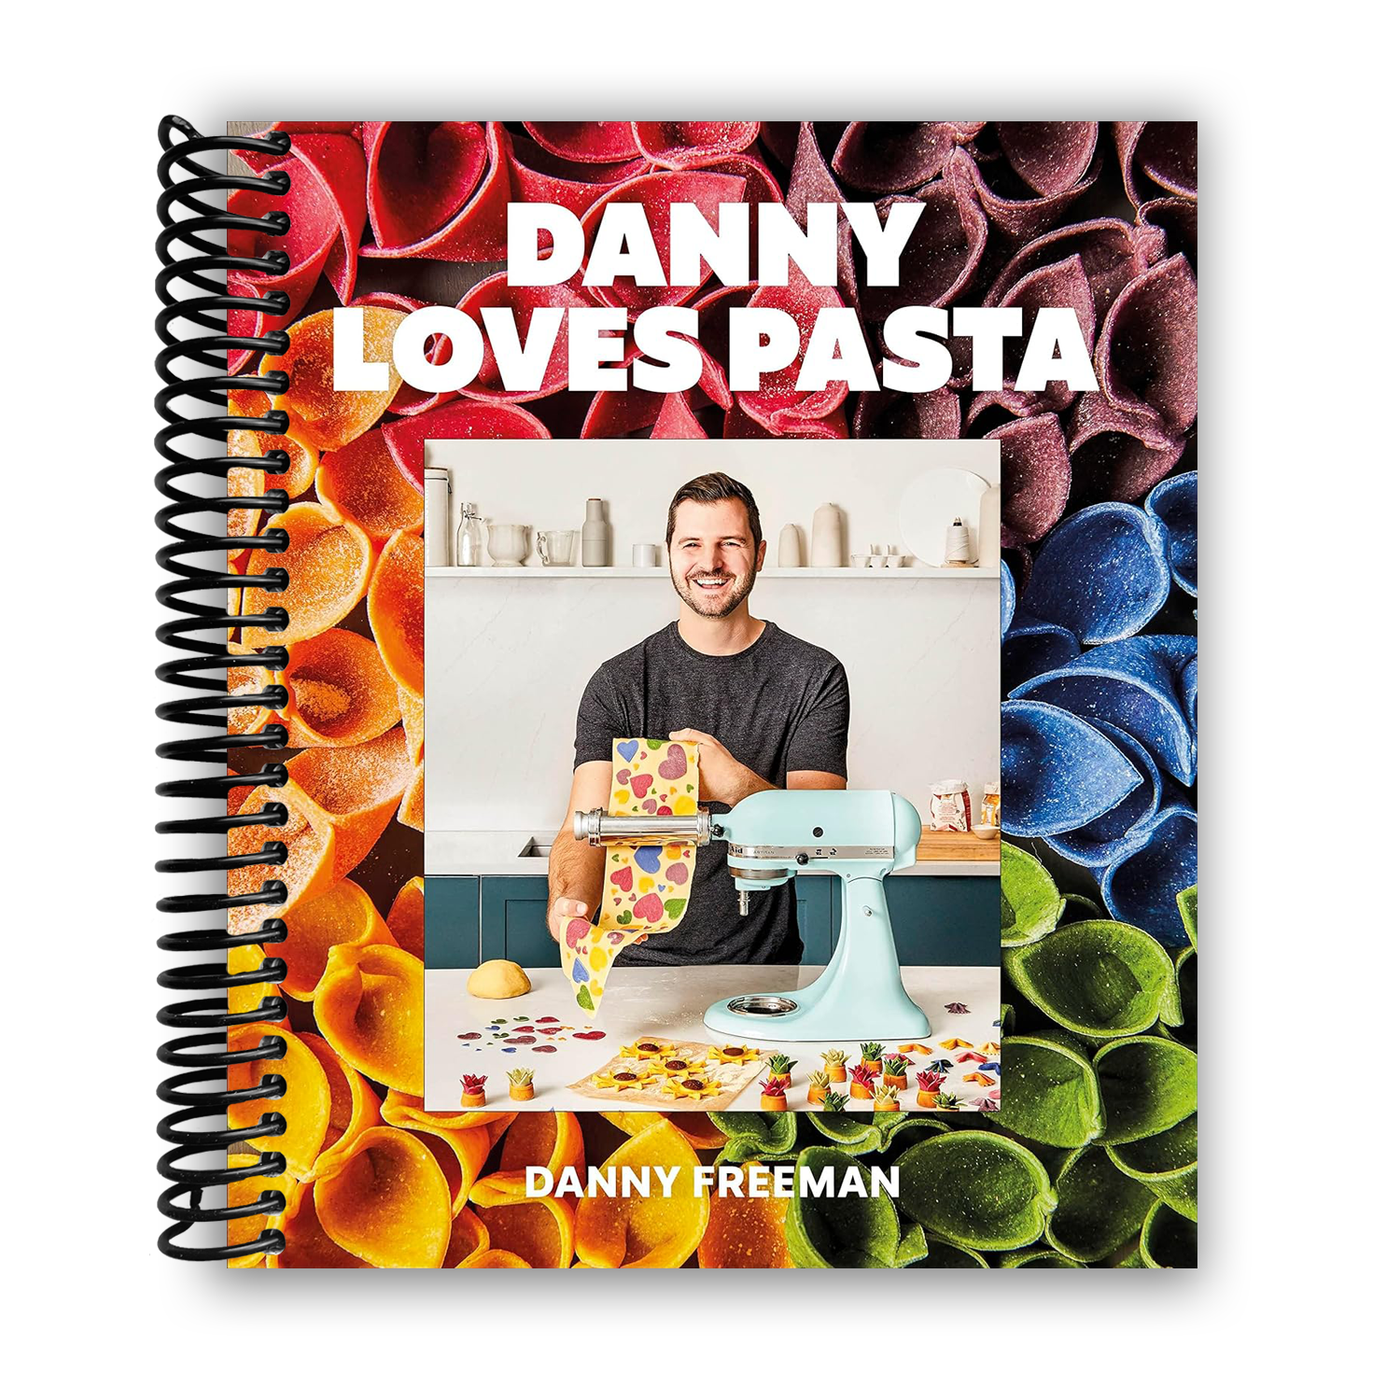 Danny Loves Pasta (Spiral Bound)